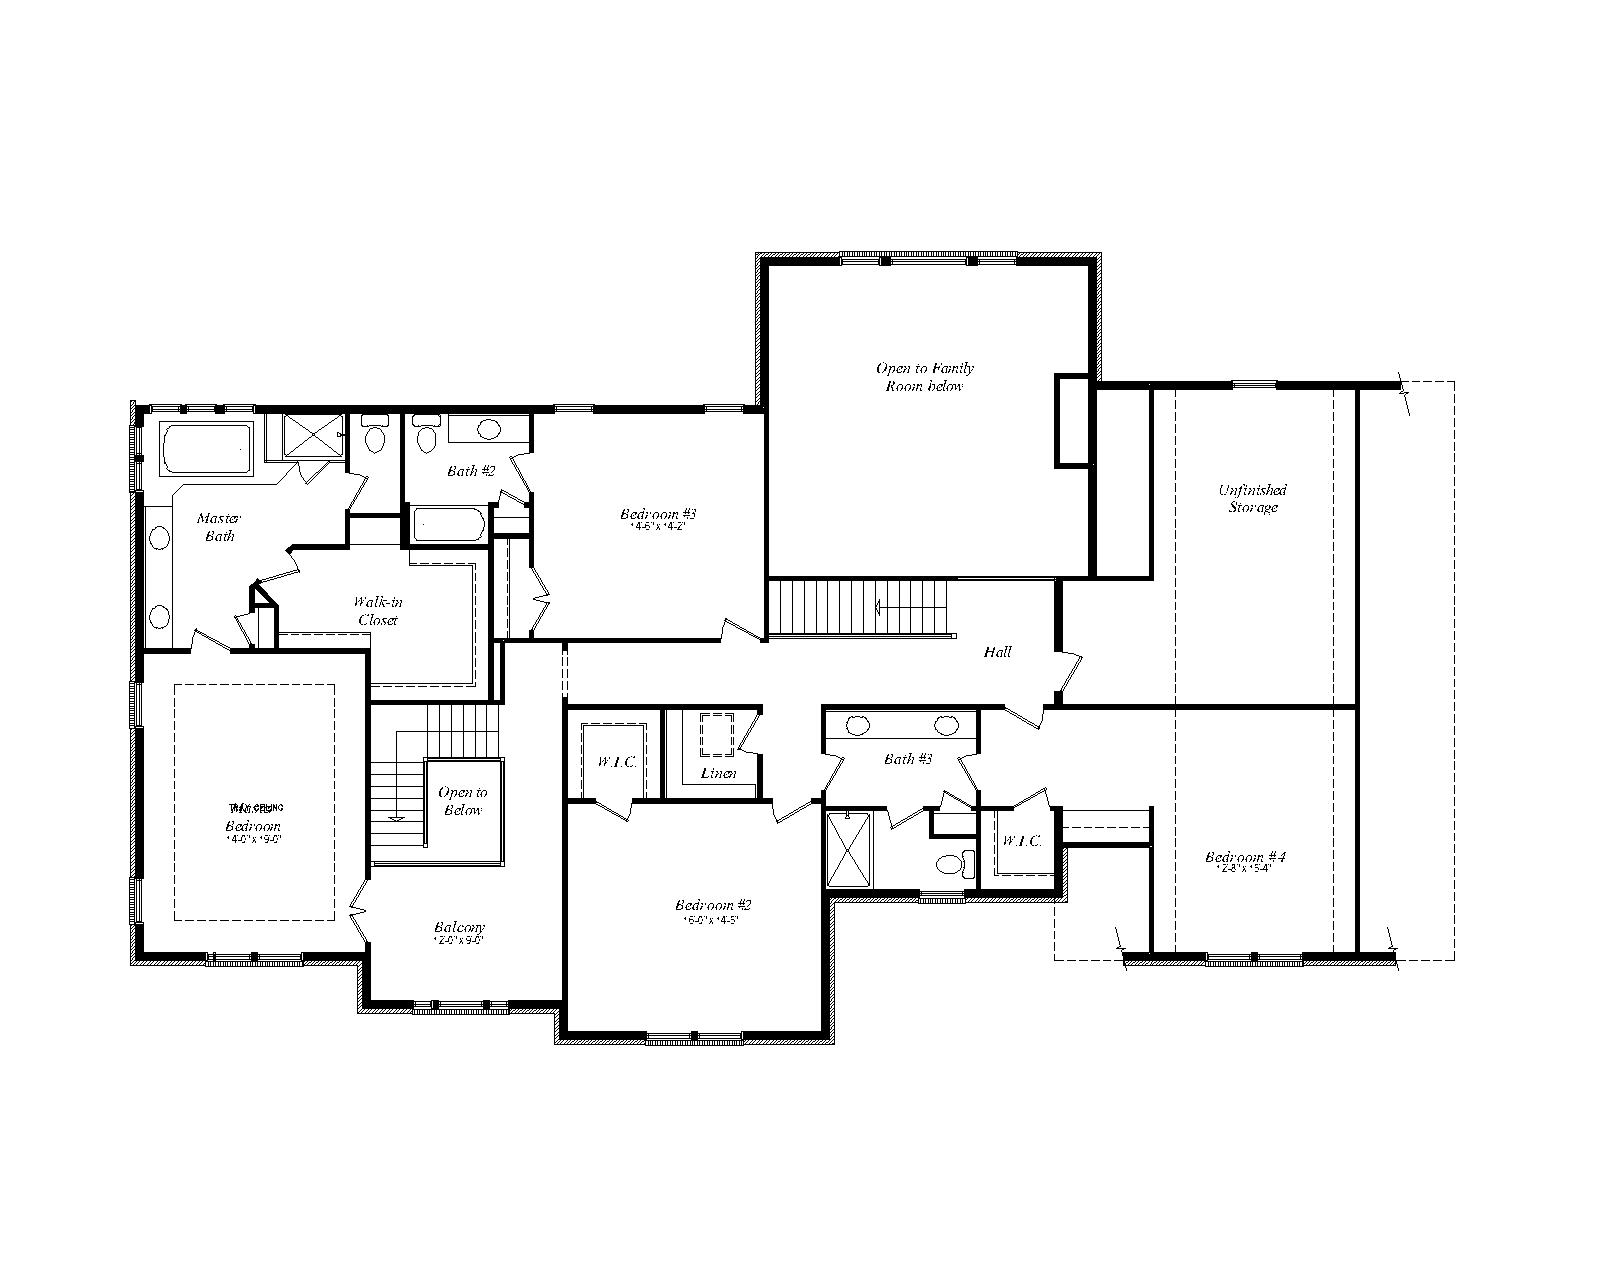 Second Floor Plan_08292016.jpg